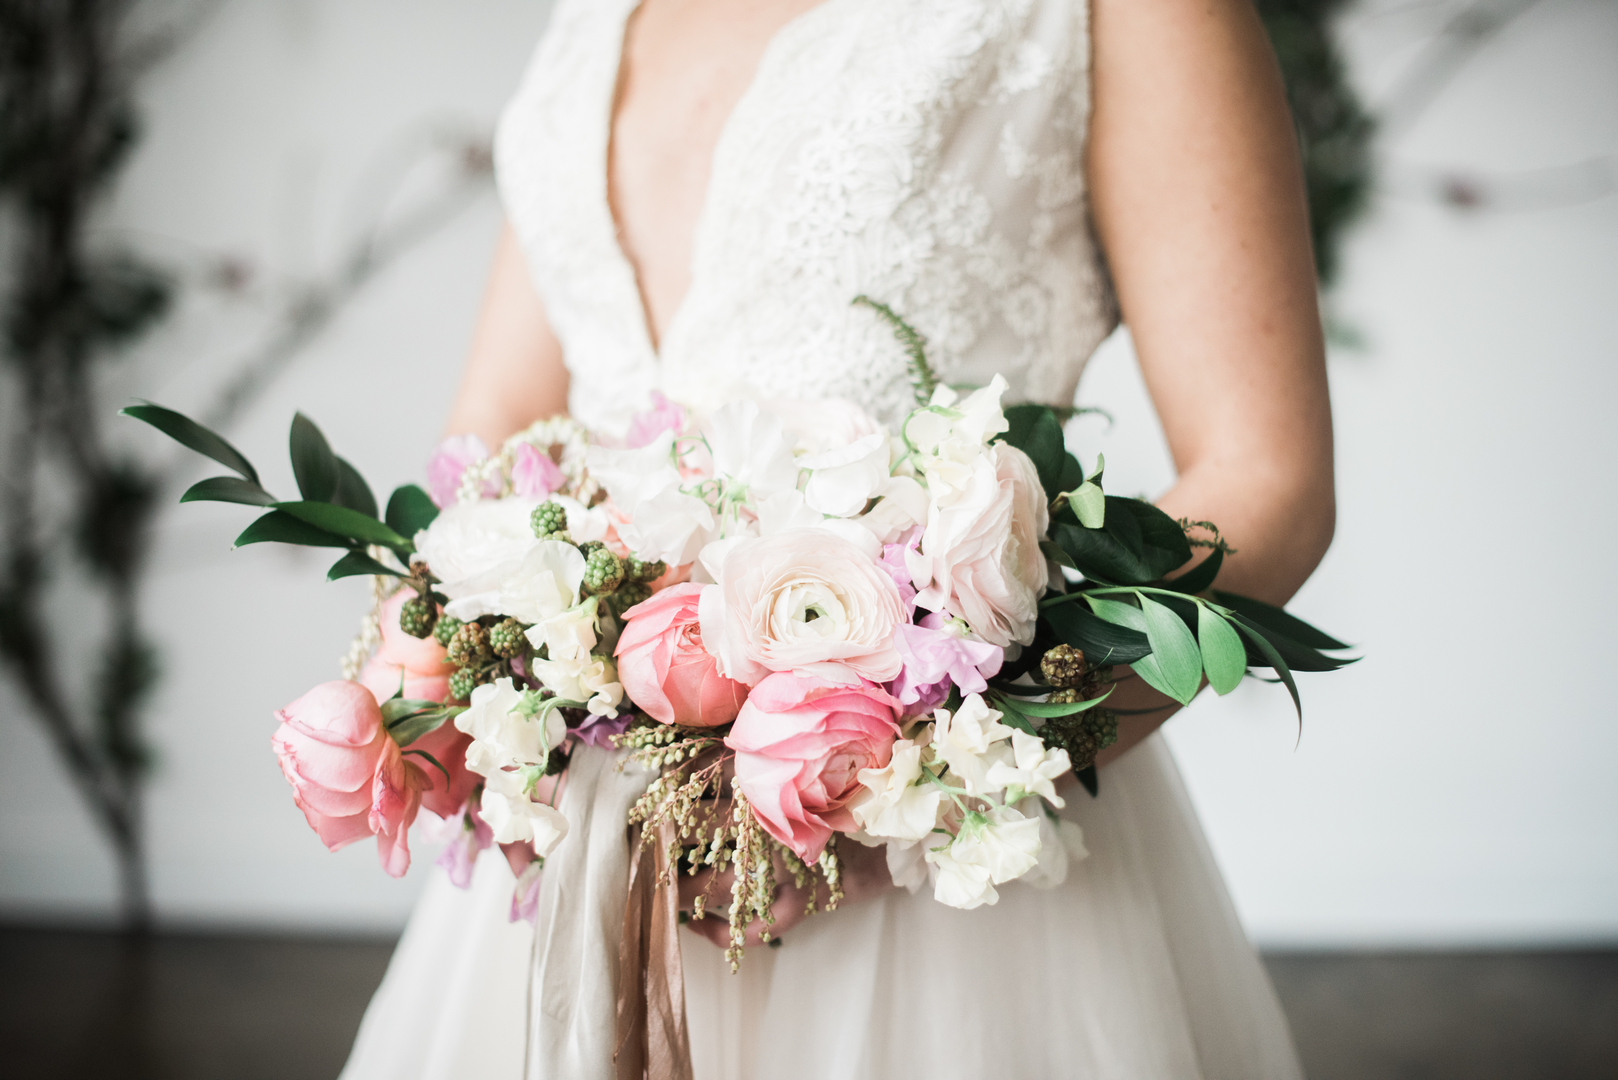 Boquet and flowers for spring wedding | Brooke Bakken | Utah Wedding Photographer